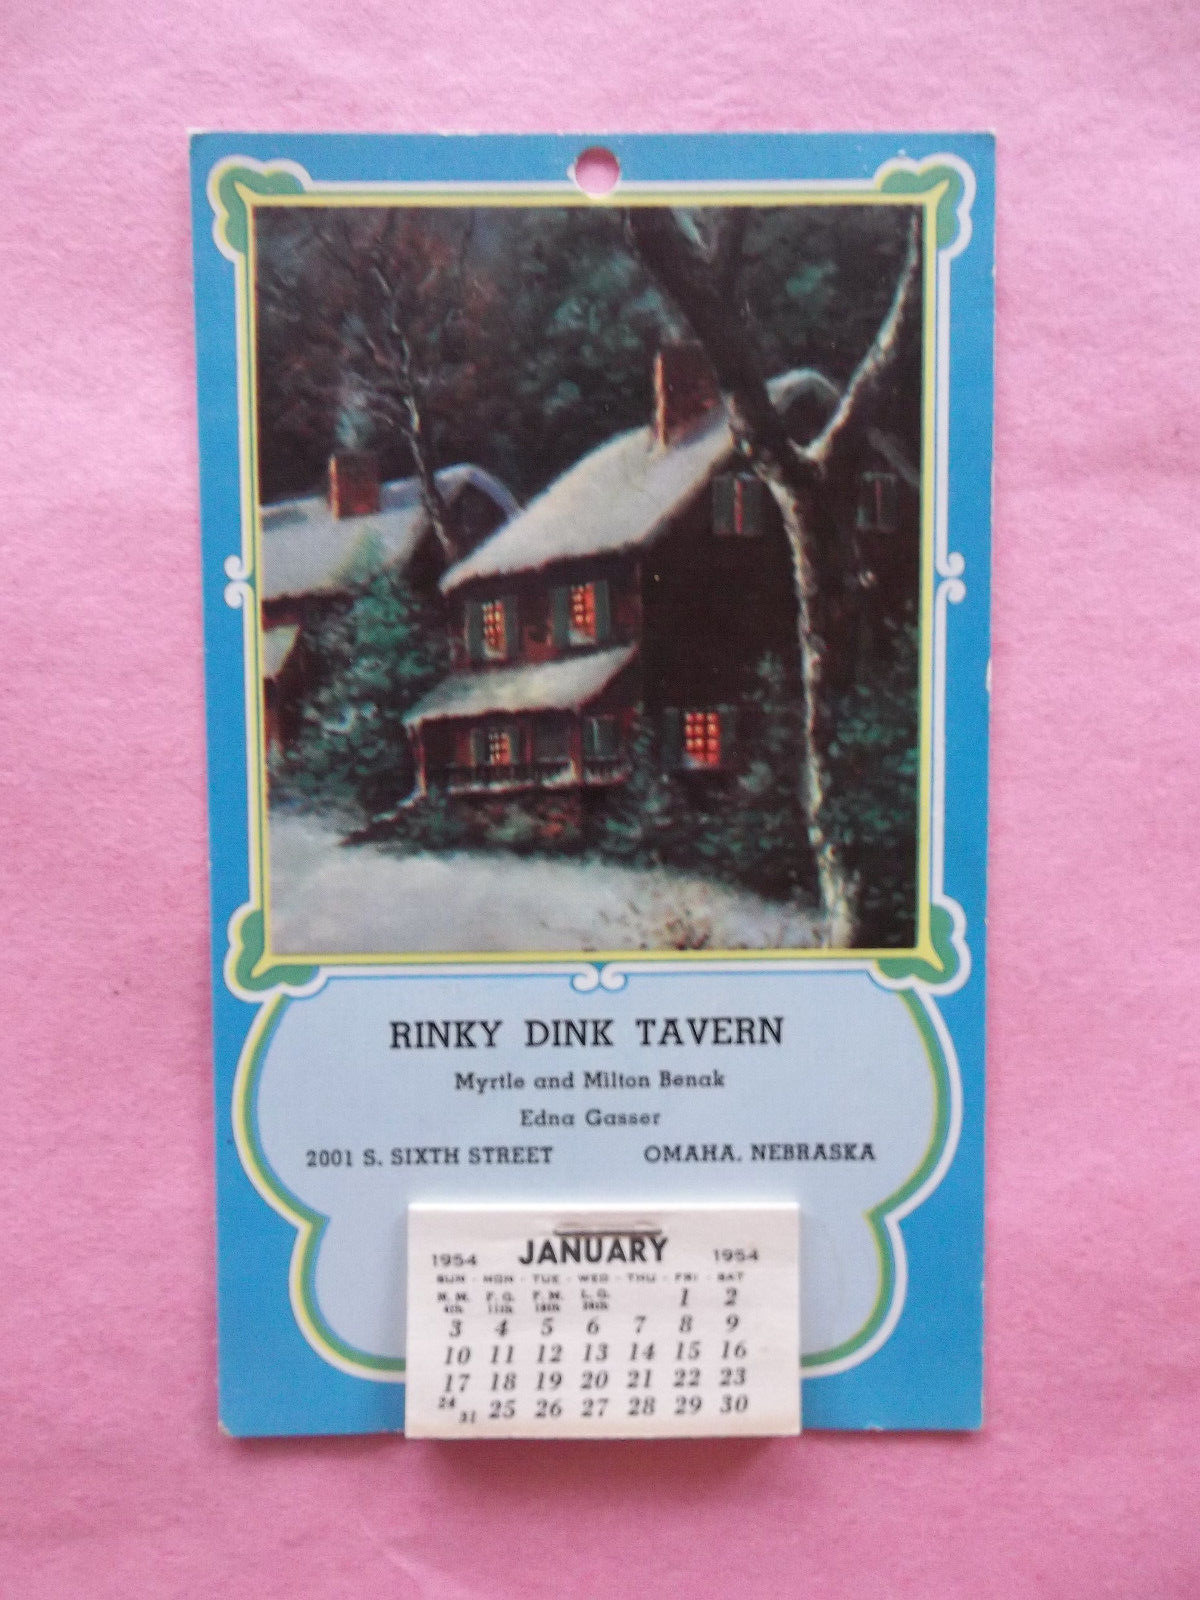 Vintage Rinky Dink Tavern on 2001 S. Sixth St. Omaha Nebraska 1954 Calendar Card